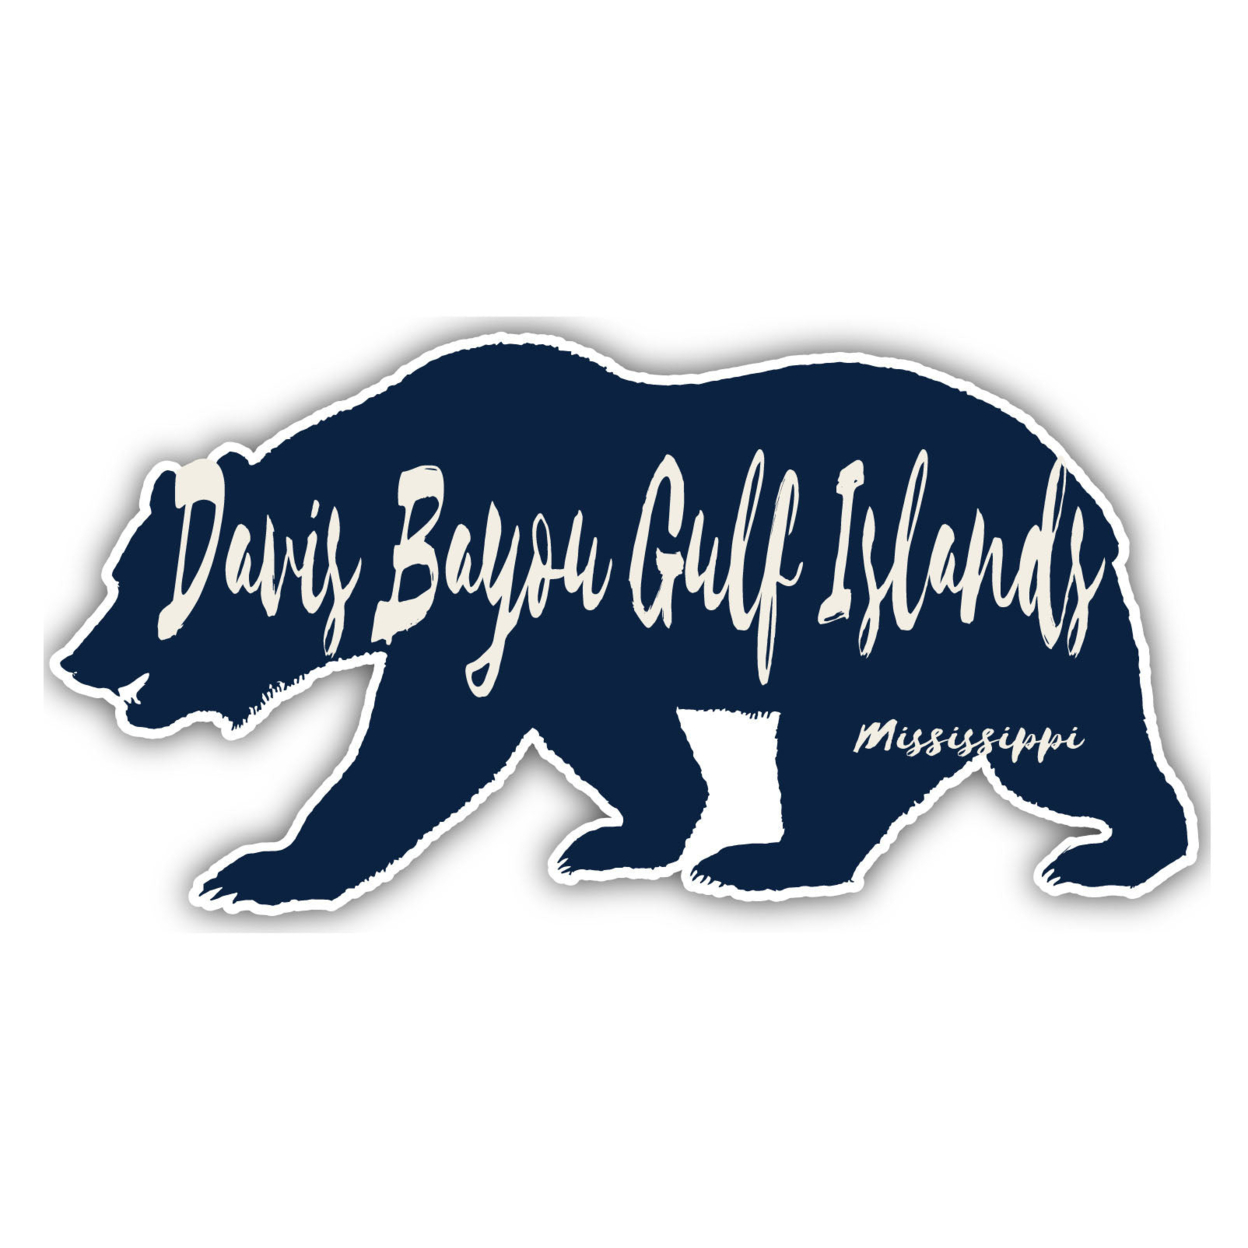 Davis Bayou Gulf Islands Mississippi Souvenir Decorative Stickers (Choose Theme And Size) - Single Unit, 12-Inch, Bear